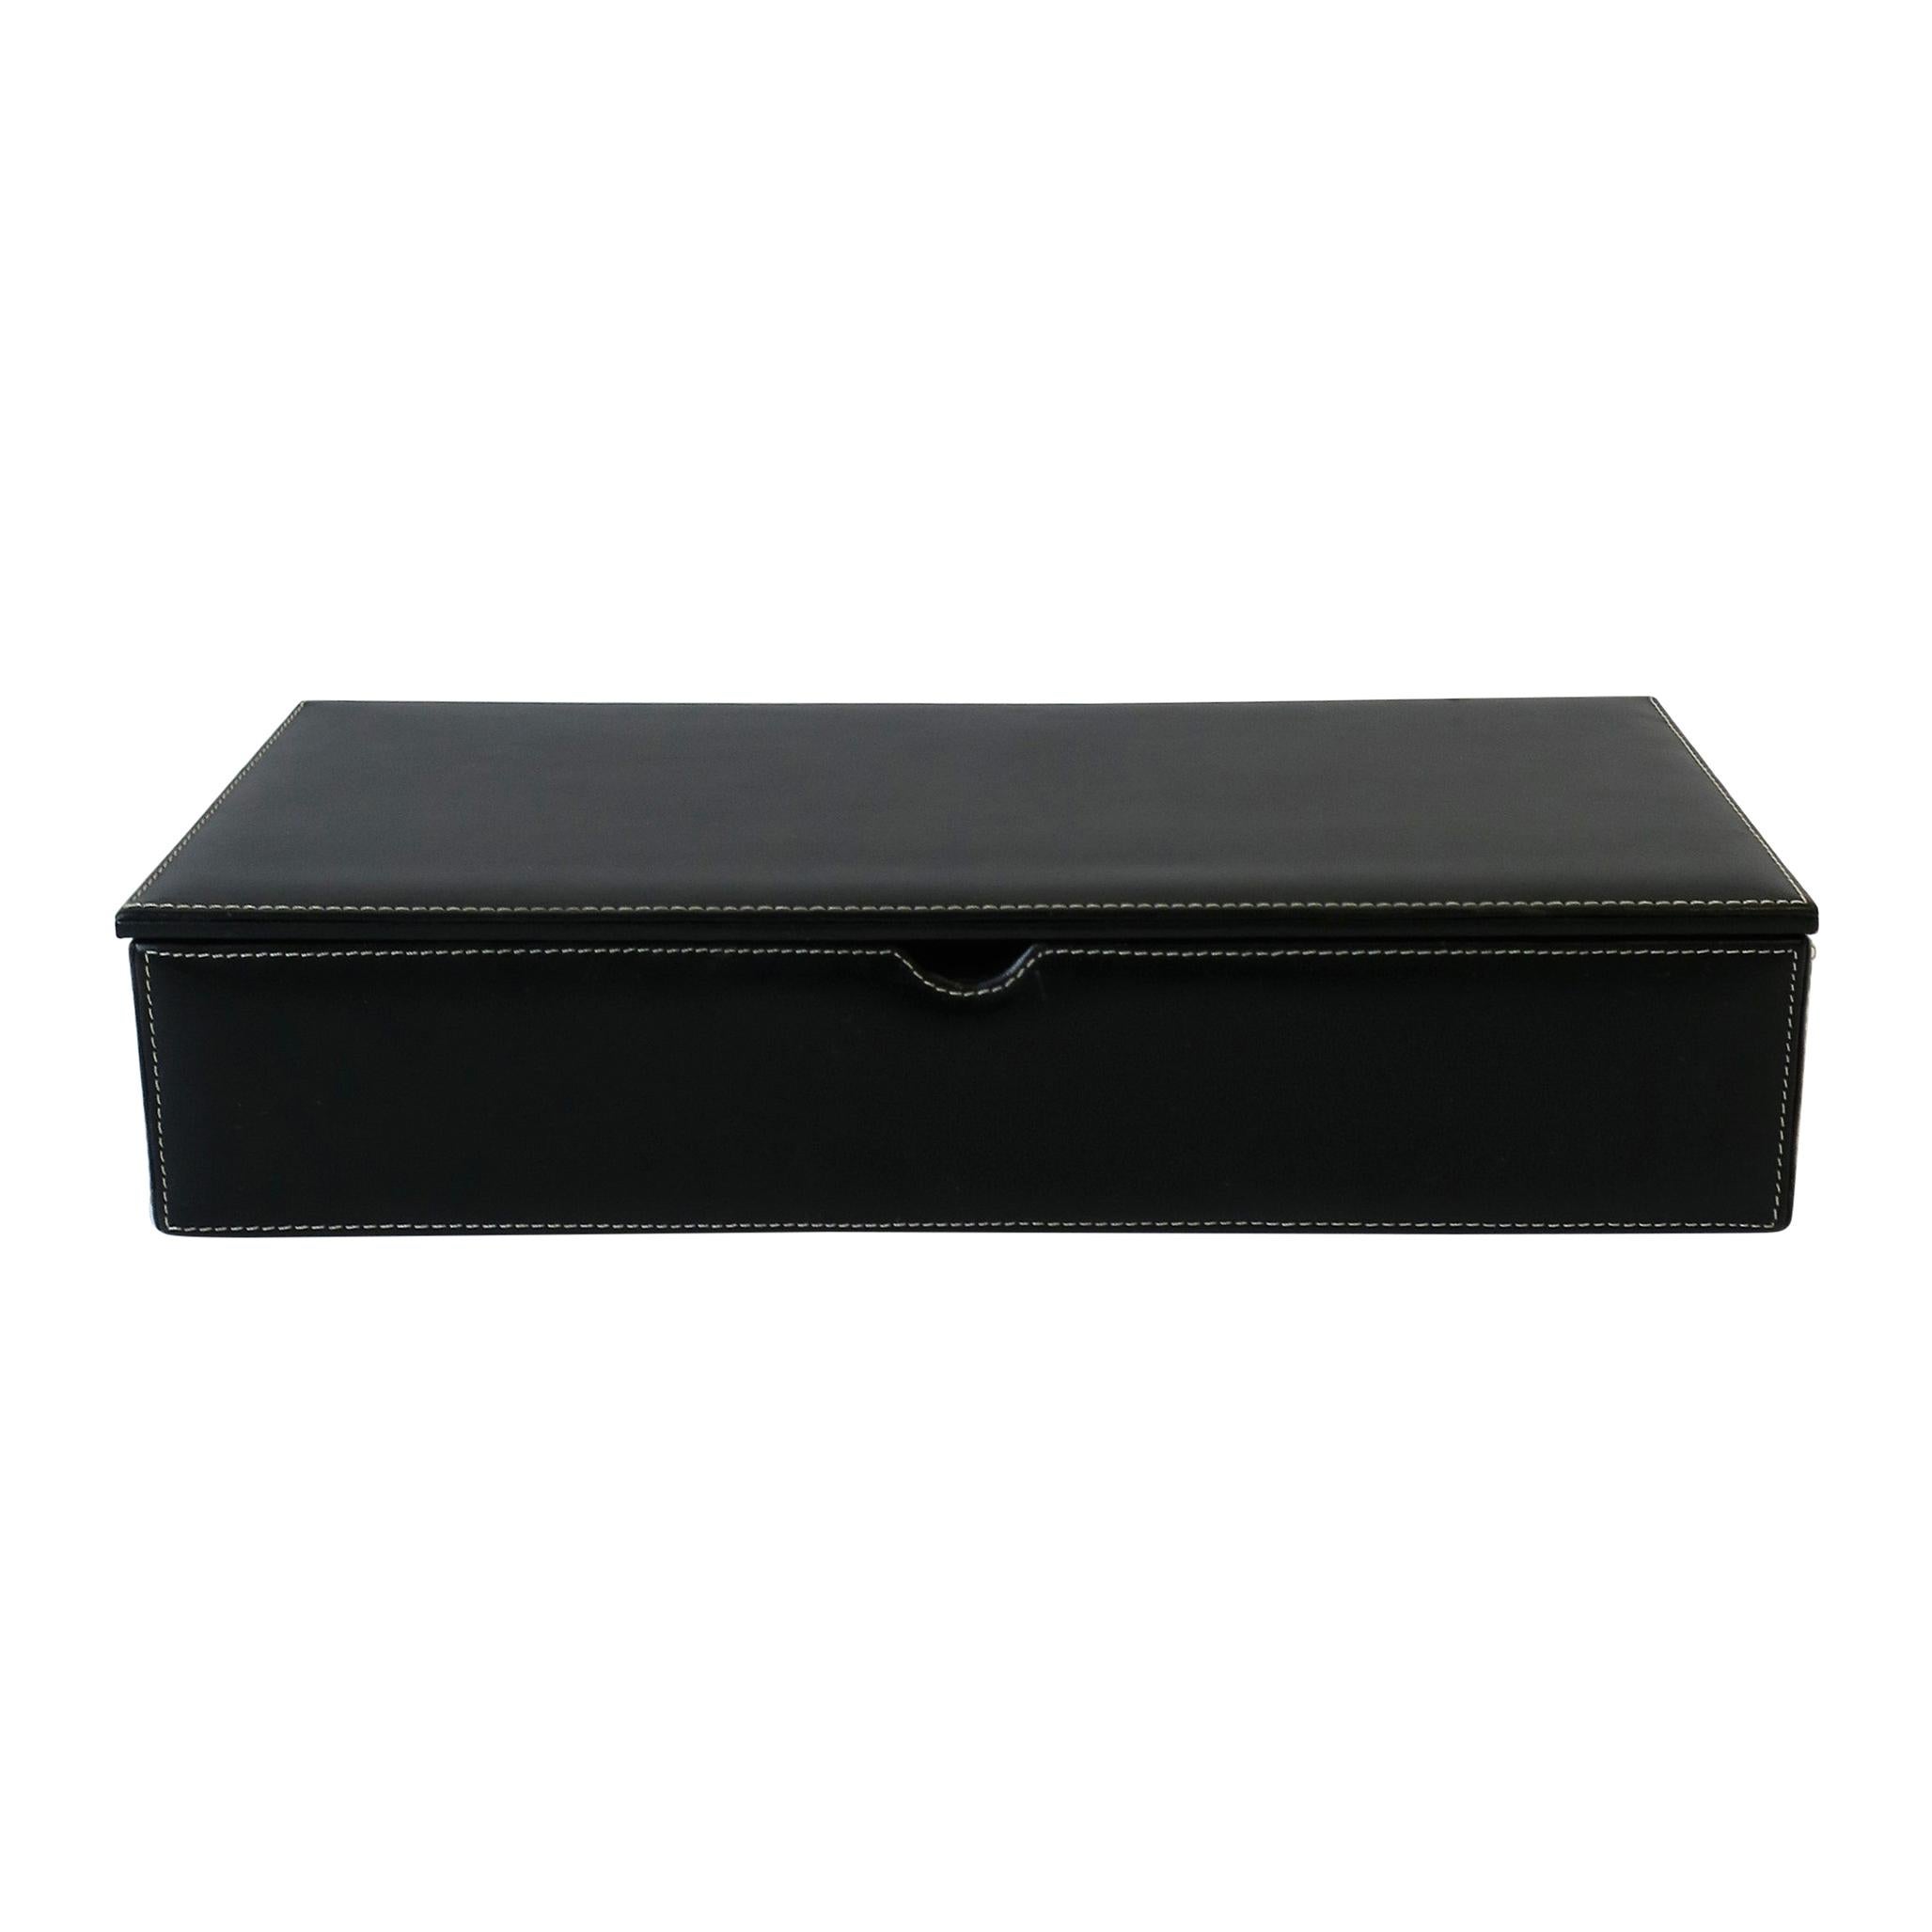 Black Leather Jewelry or Desk Box